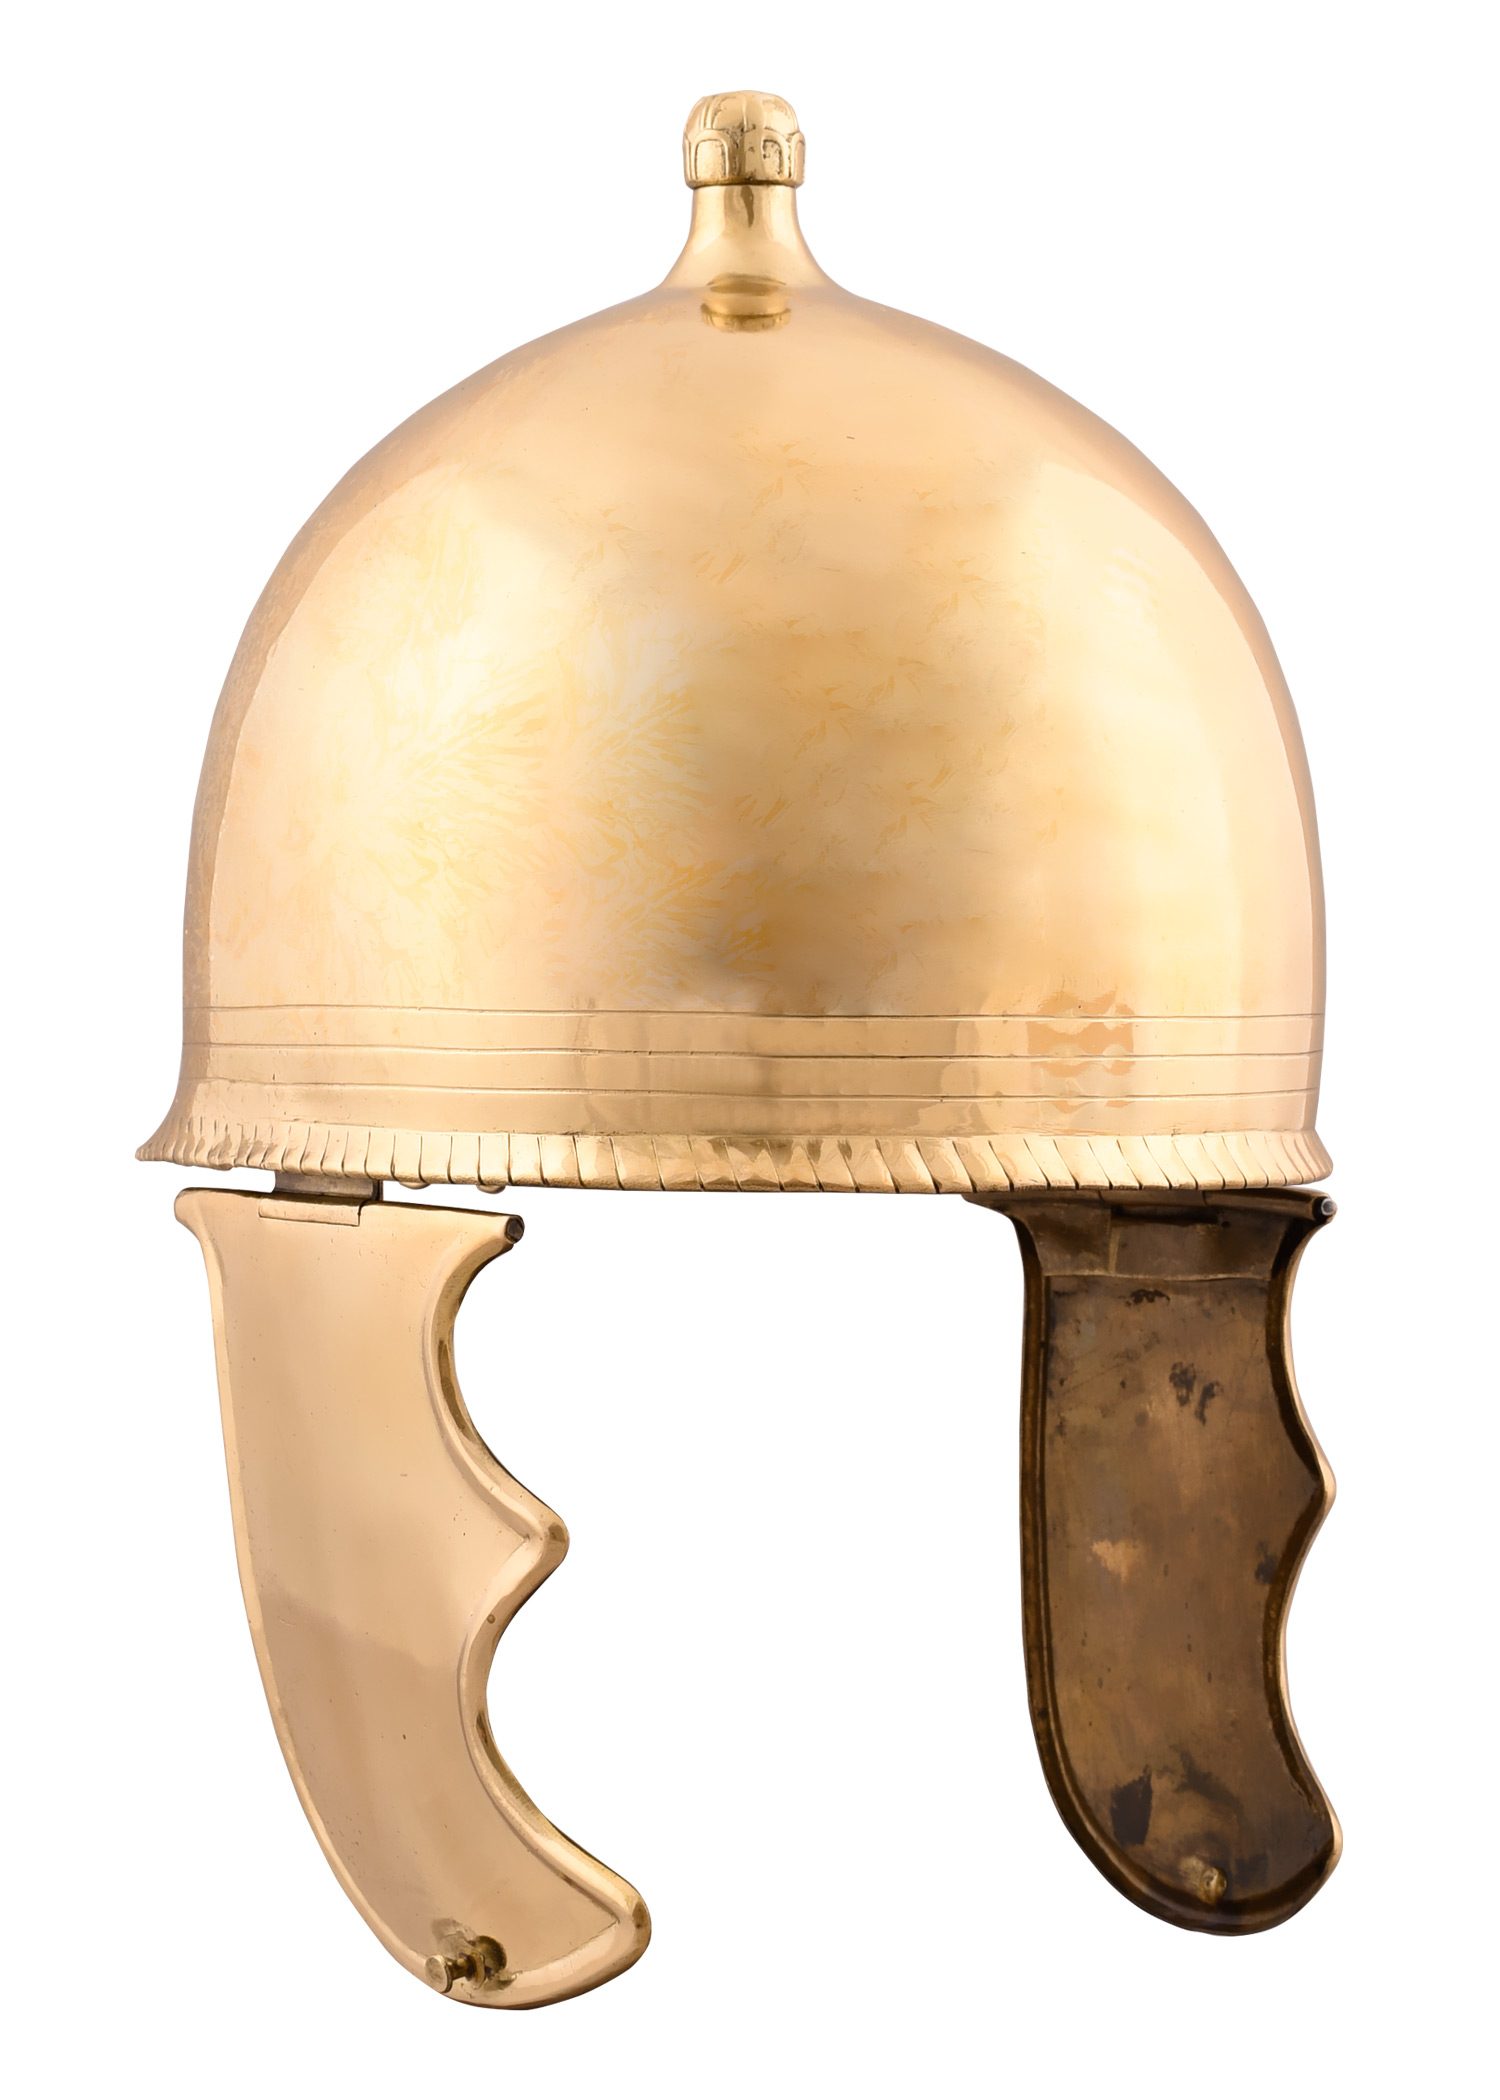 Republikanischer Montefortino-Helm, Messing, ca. 1,2 mm